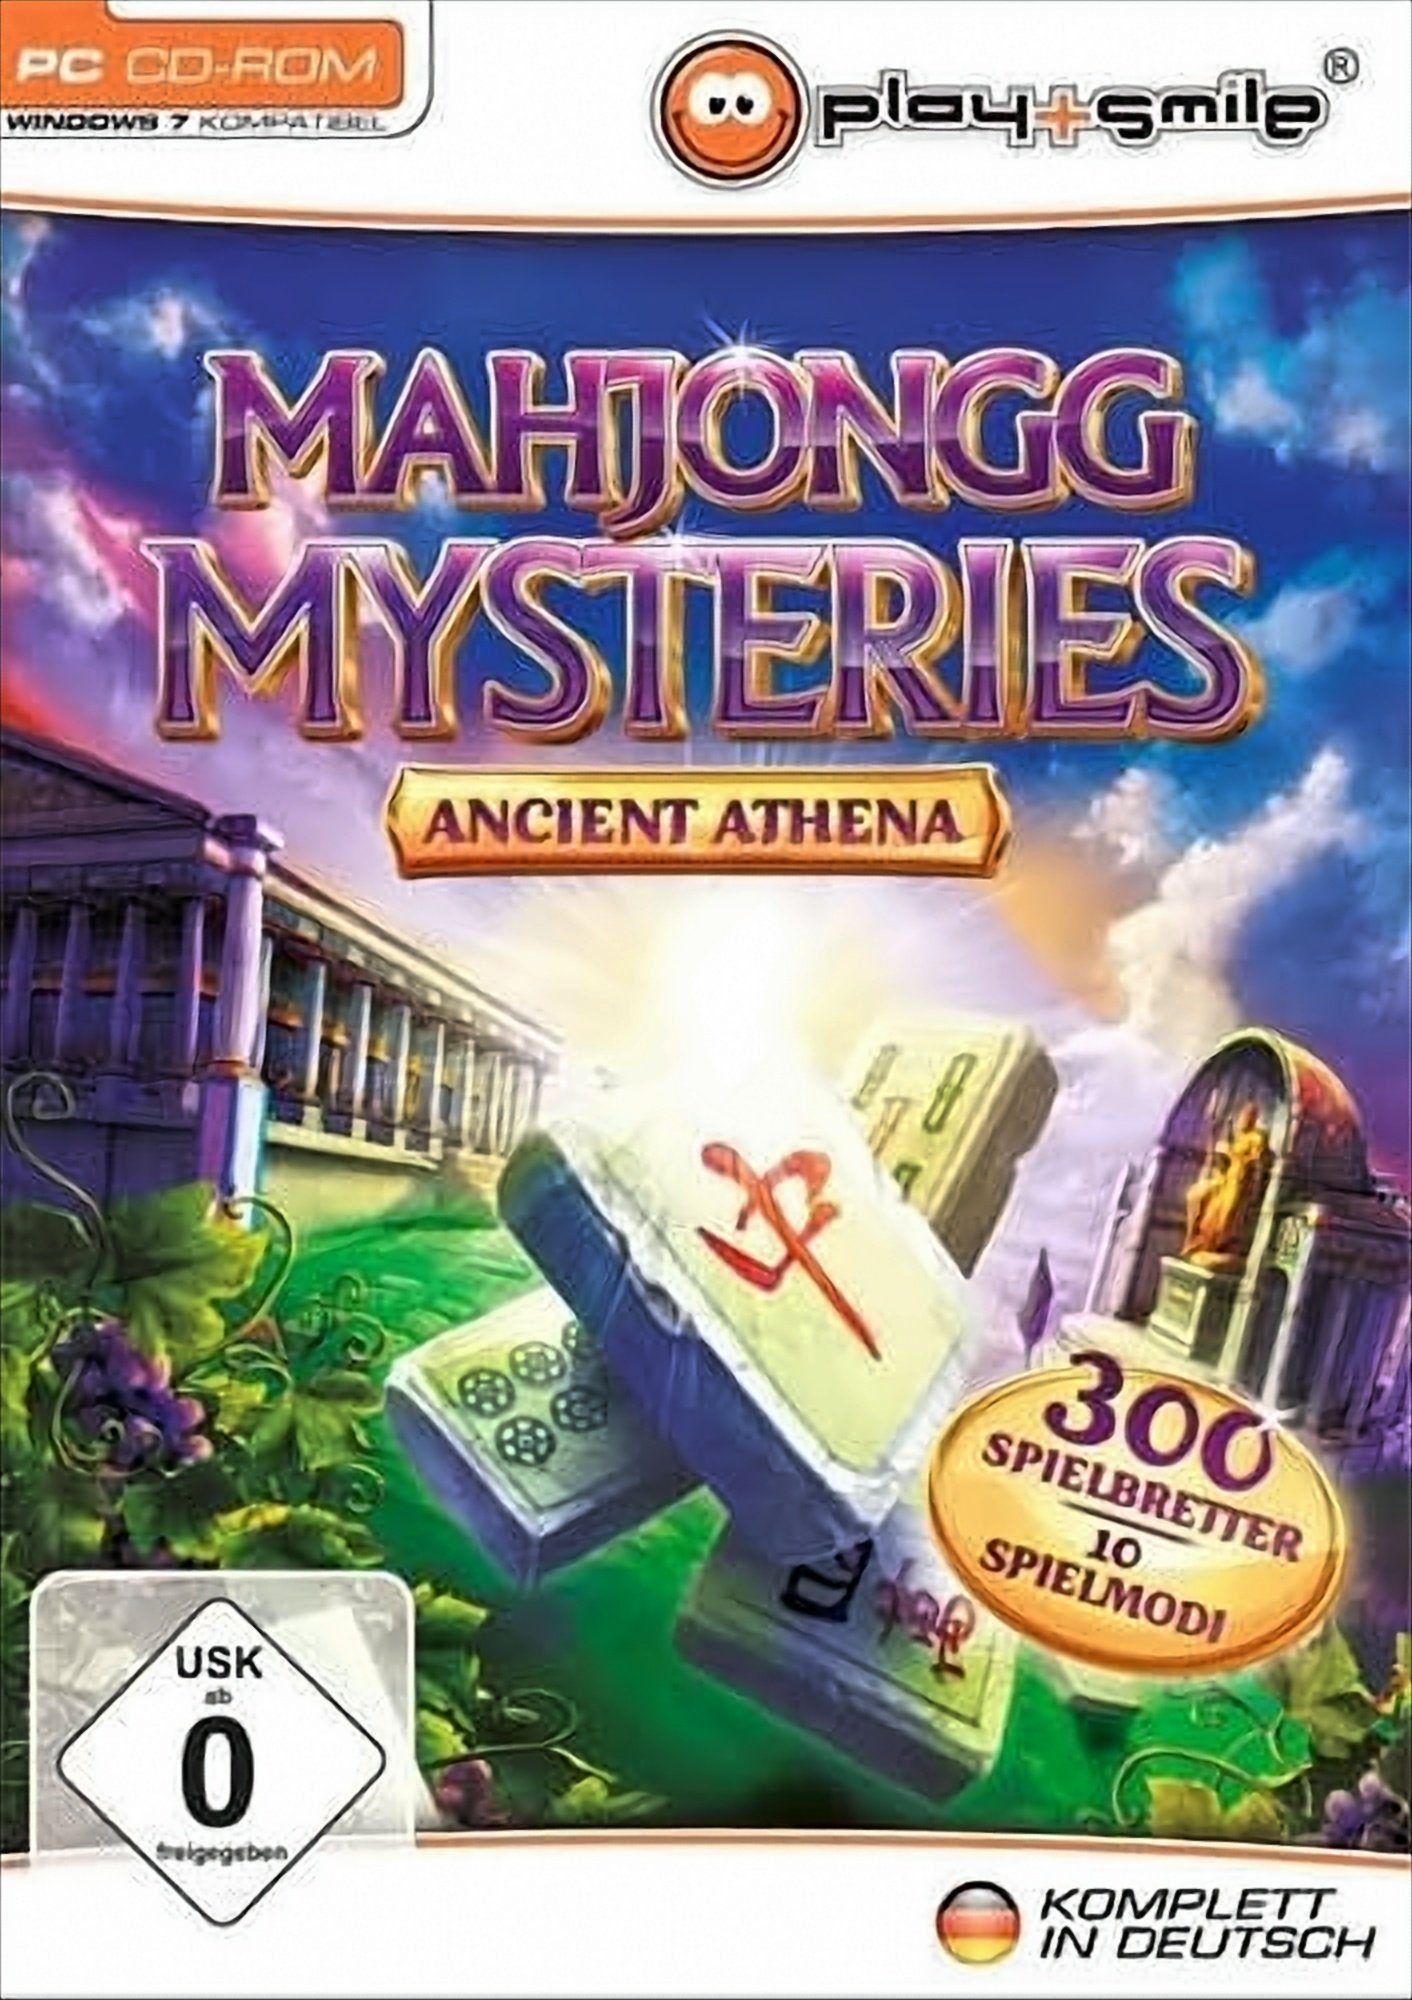 Mahjongg Mysteries: Ancient Athena PC